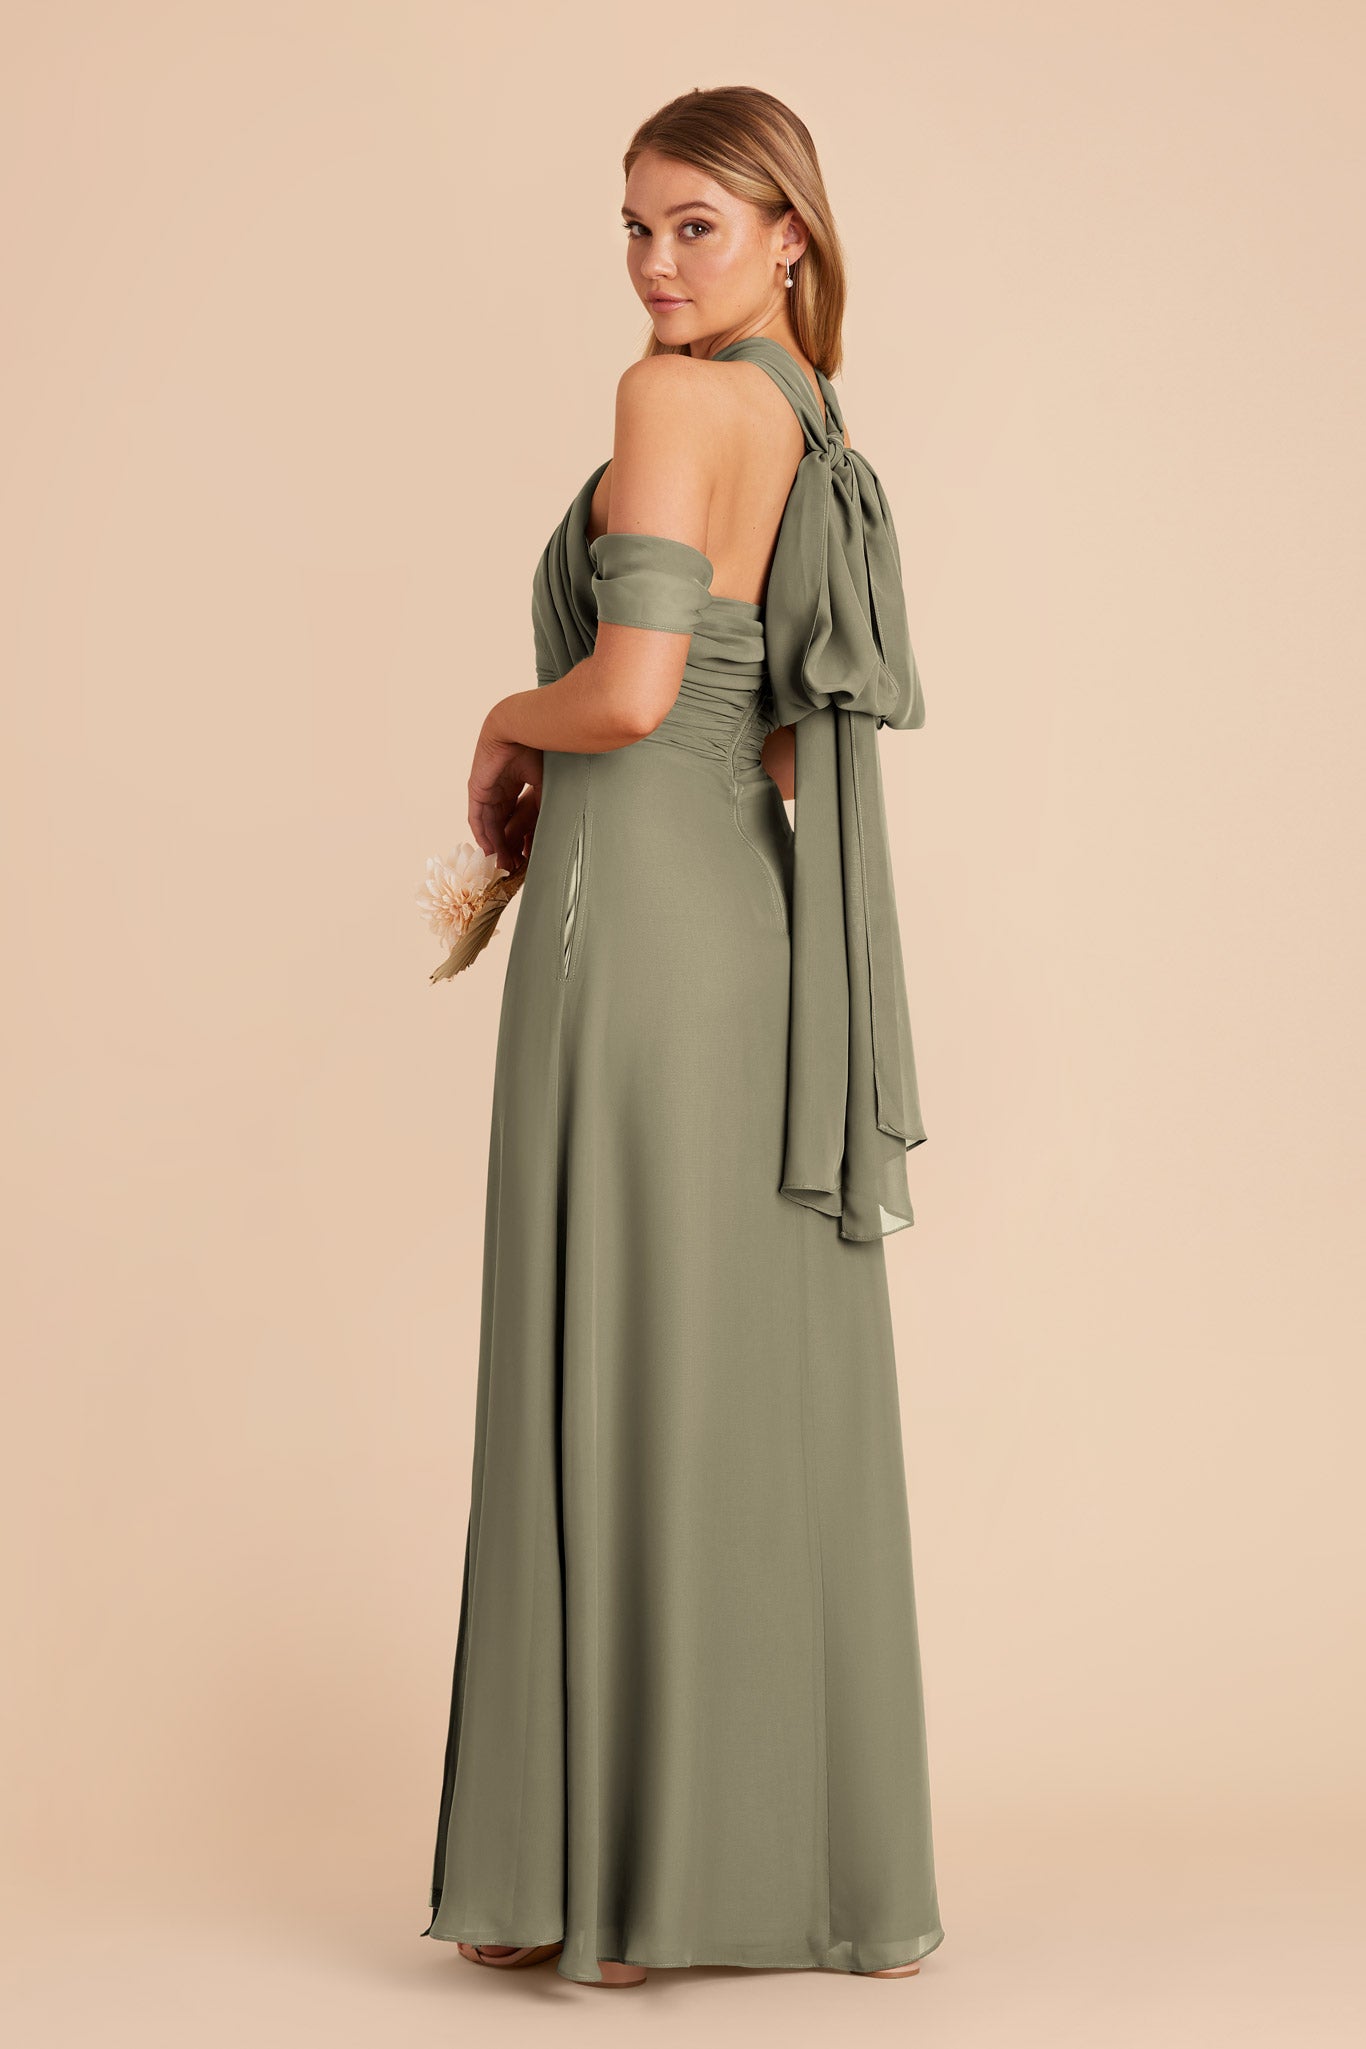 Moss Green Cara Chiffon Dress by Birdy Grey